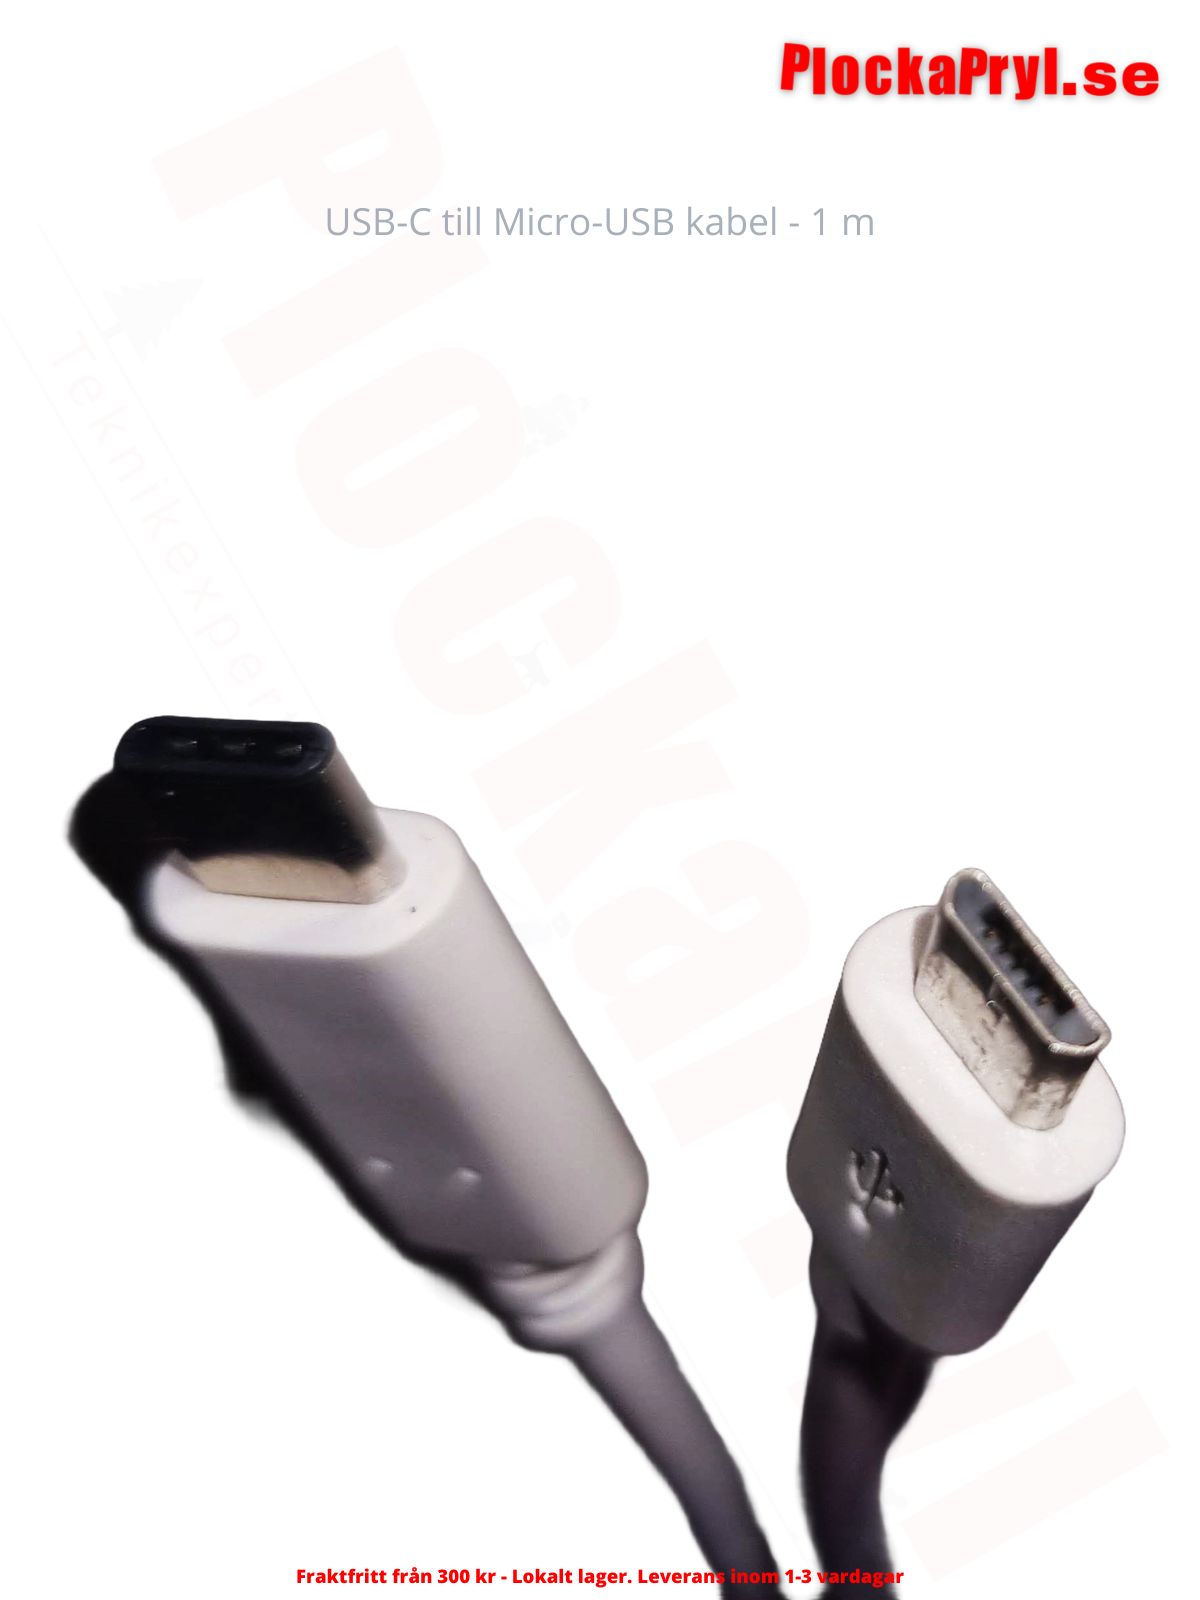 USB-C till Micro-USB - Kabel 1 meter